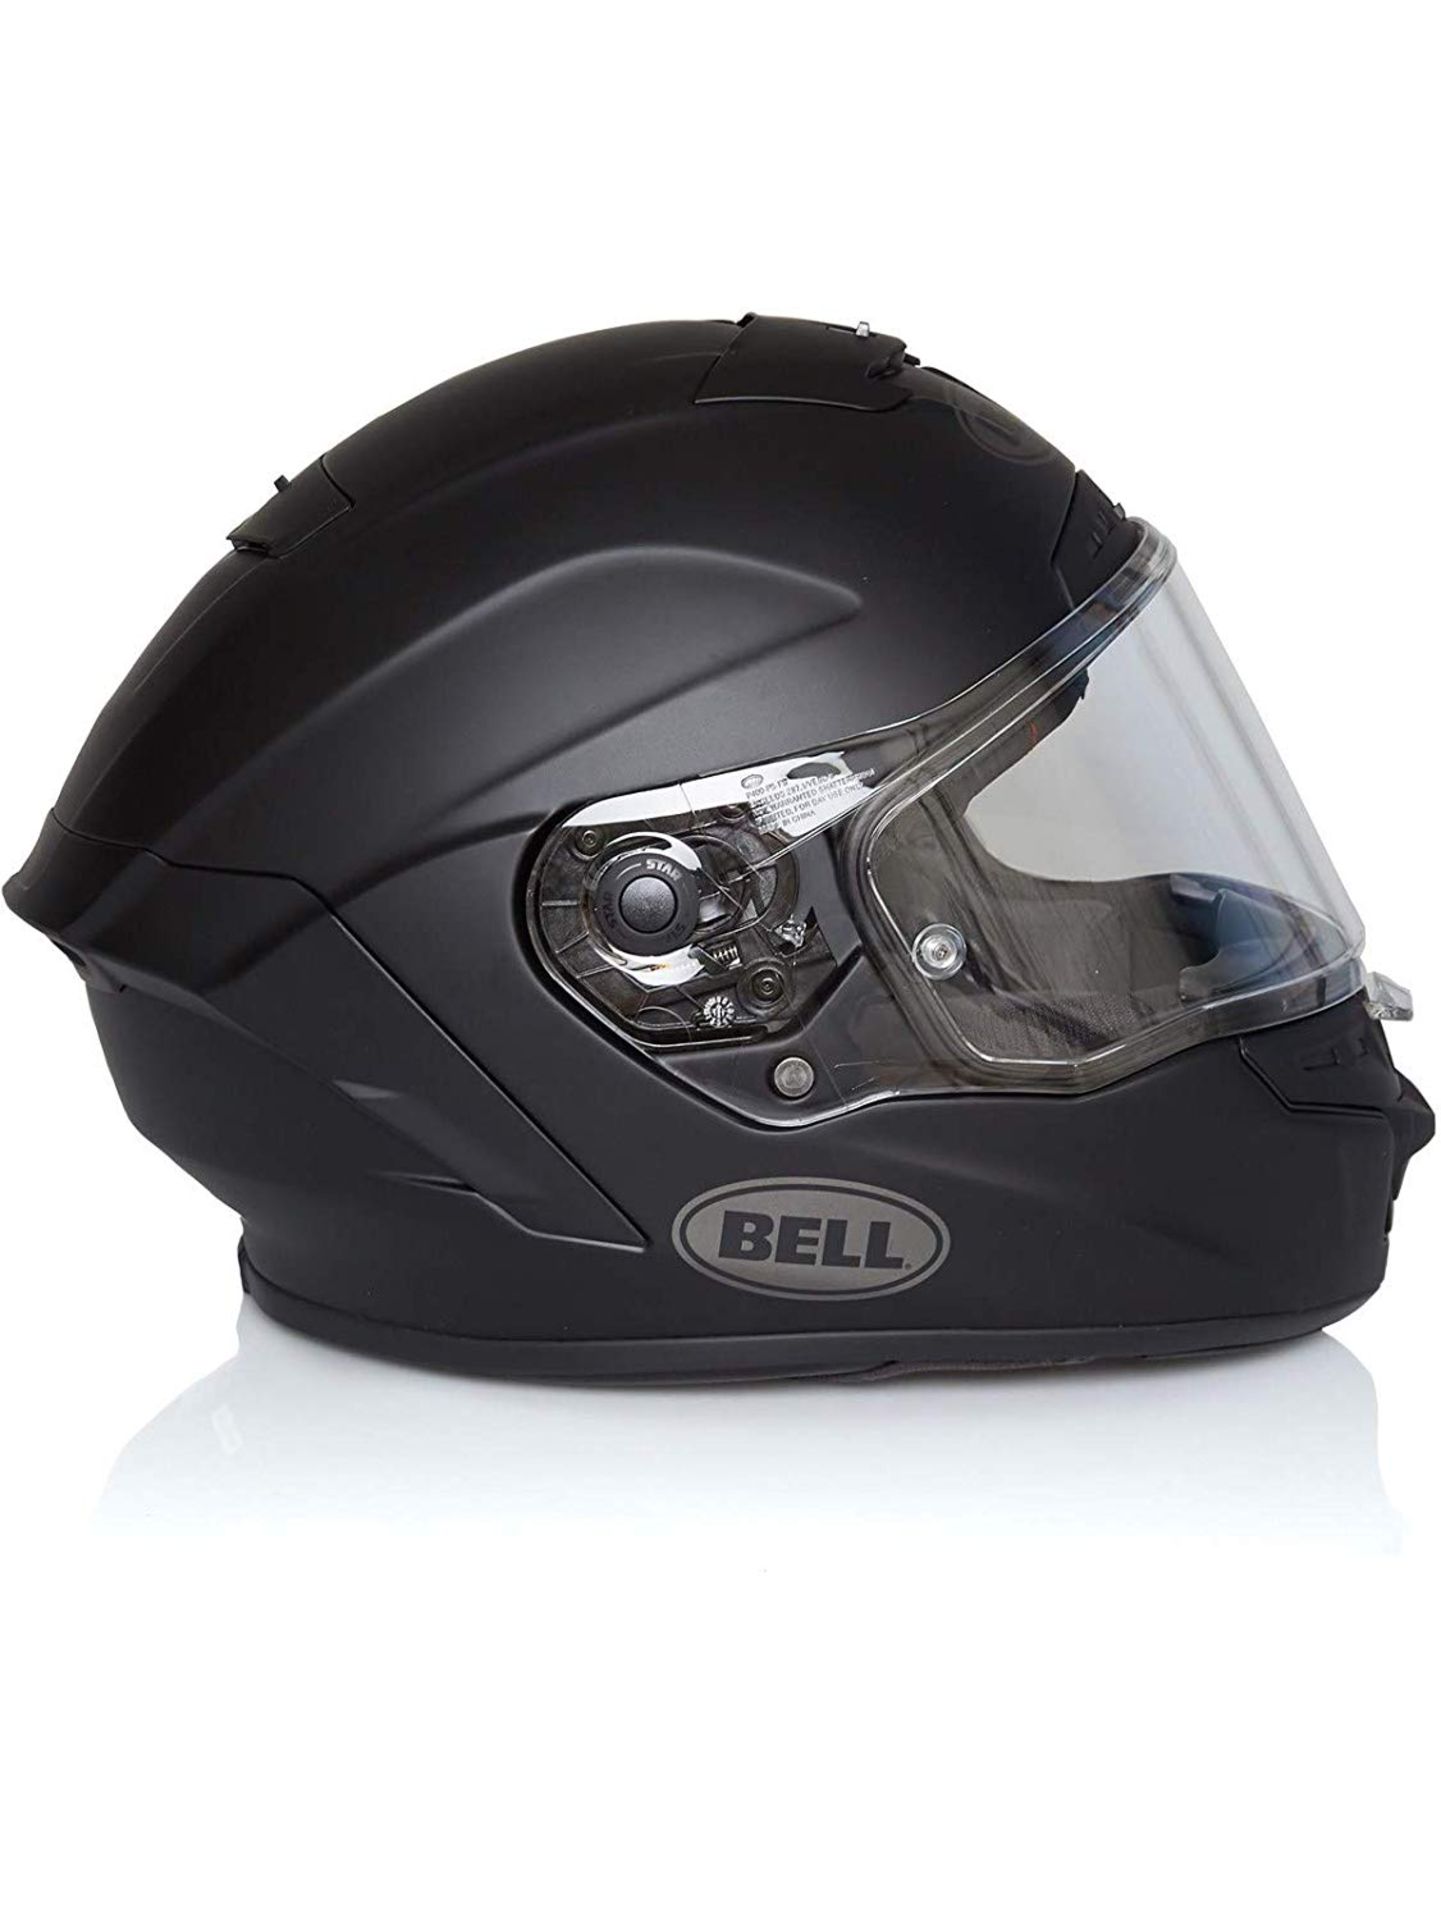 Bell Helmets Star Solid Mips, Mat Black M, RRP £314.99